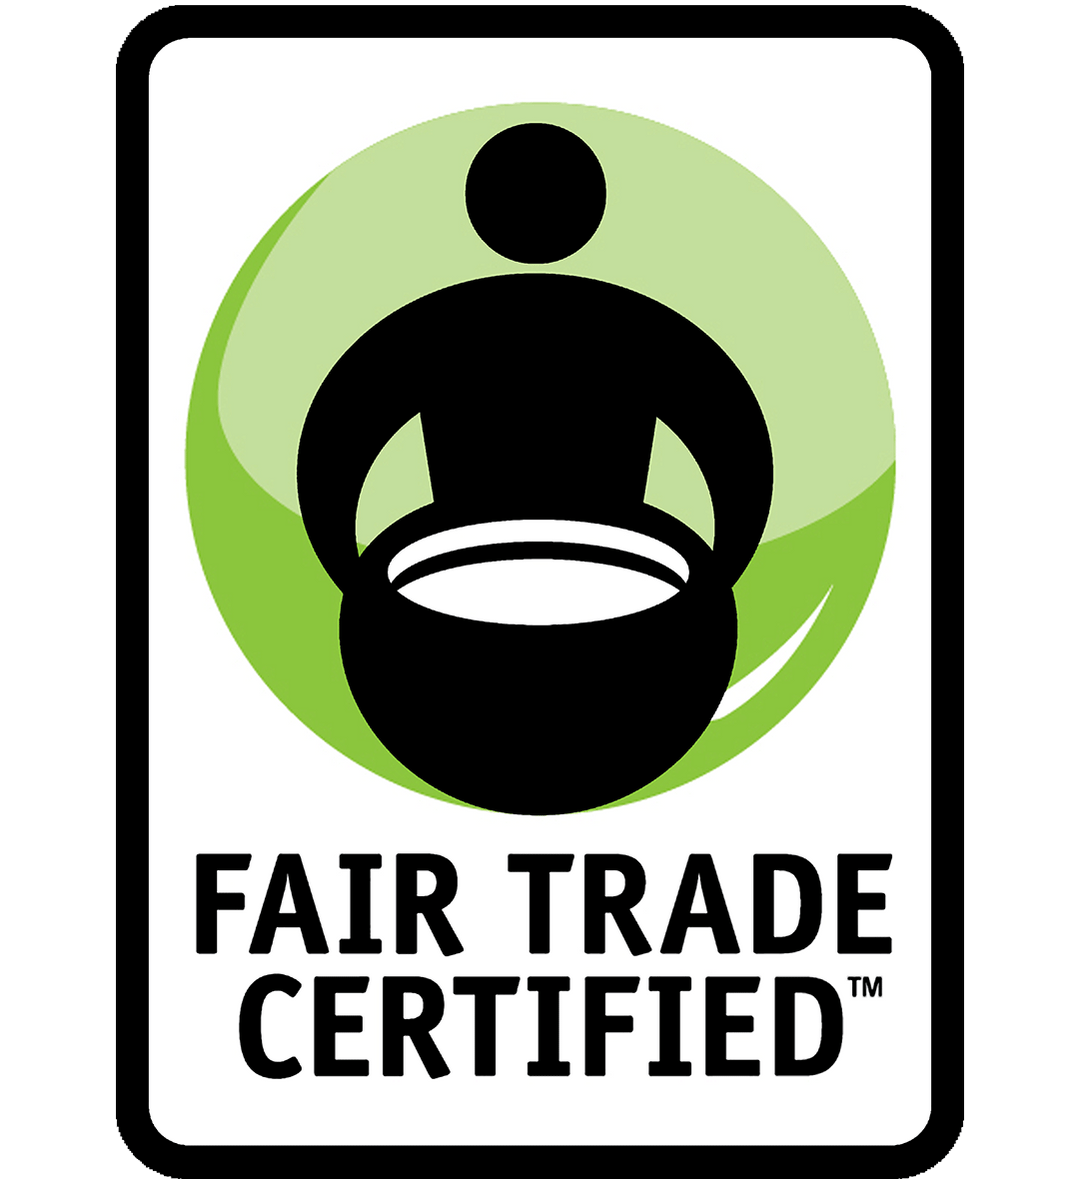 Fair trade certified seal.